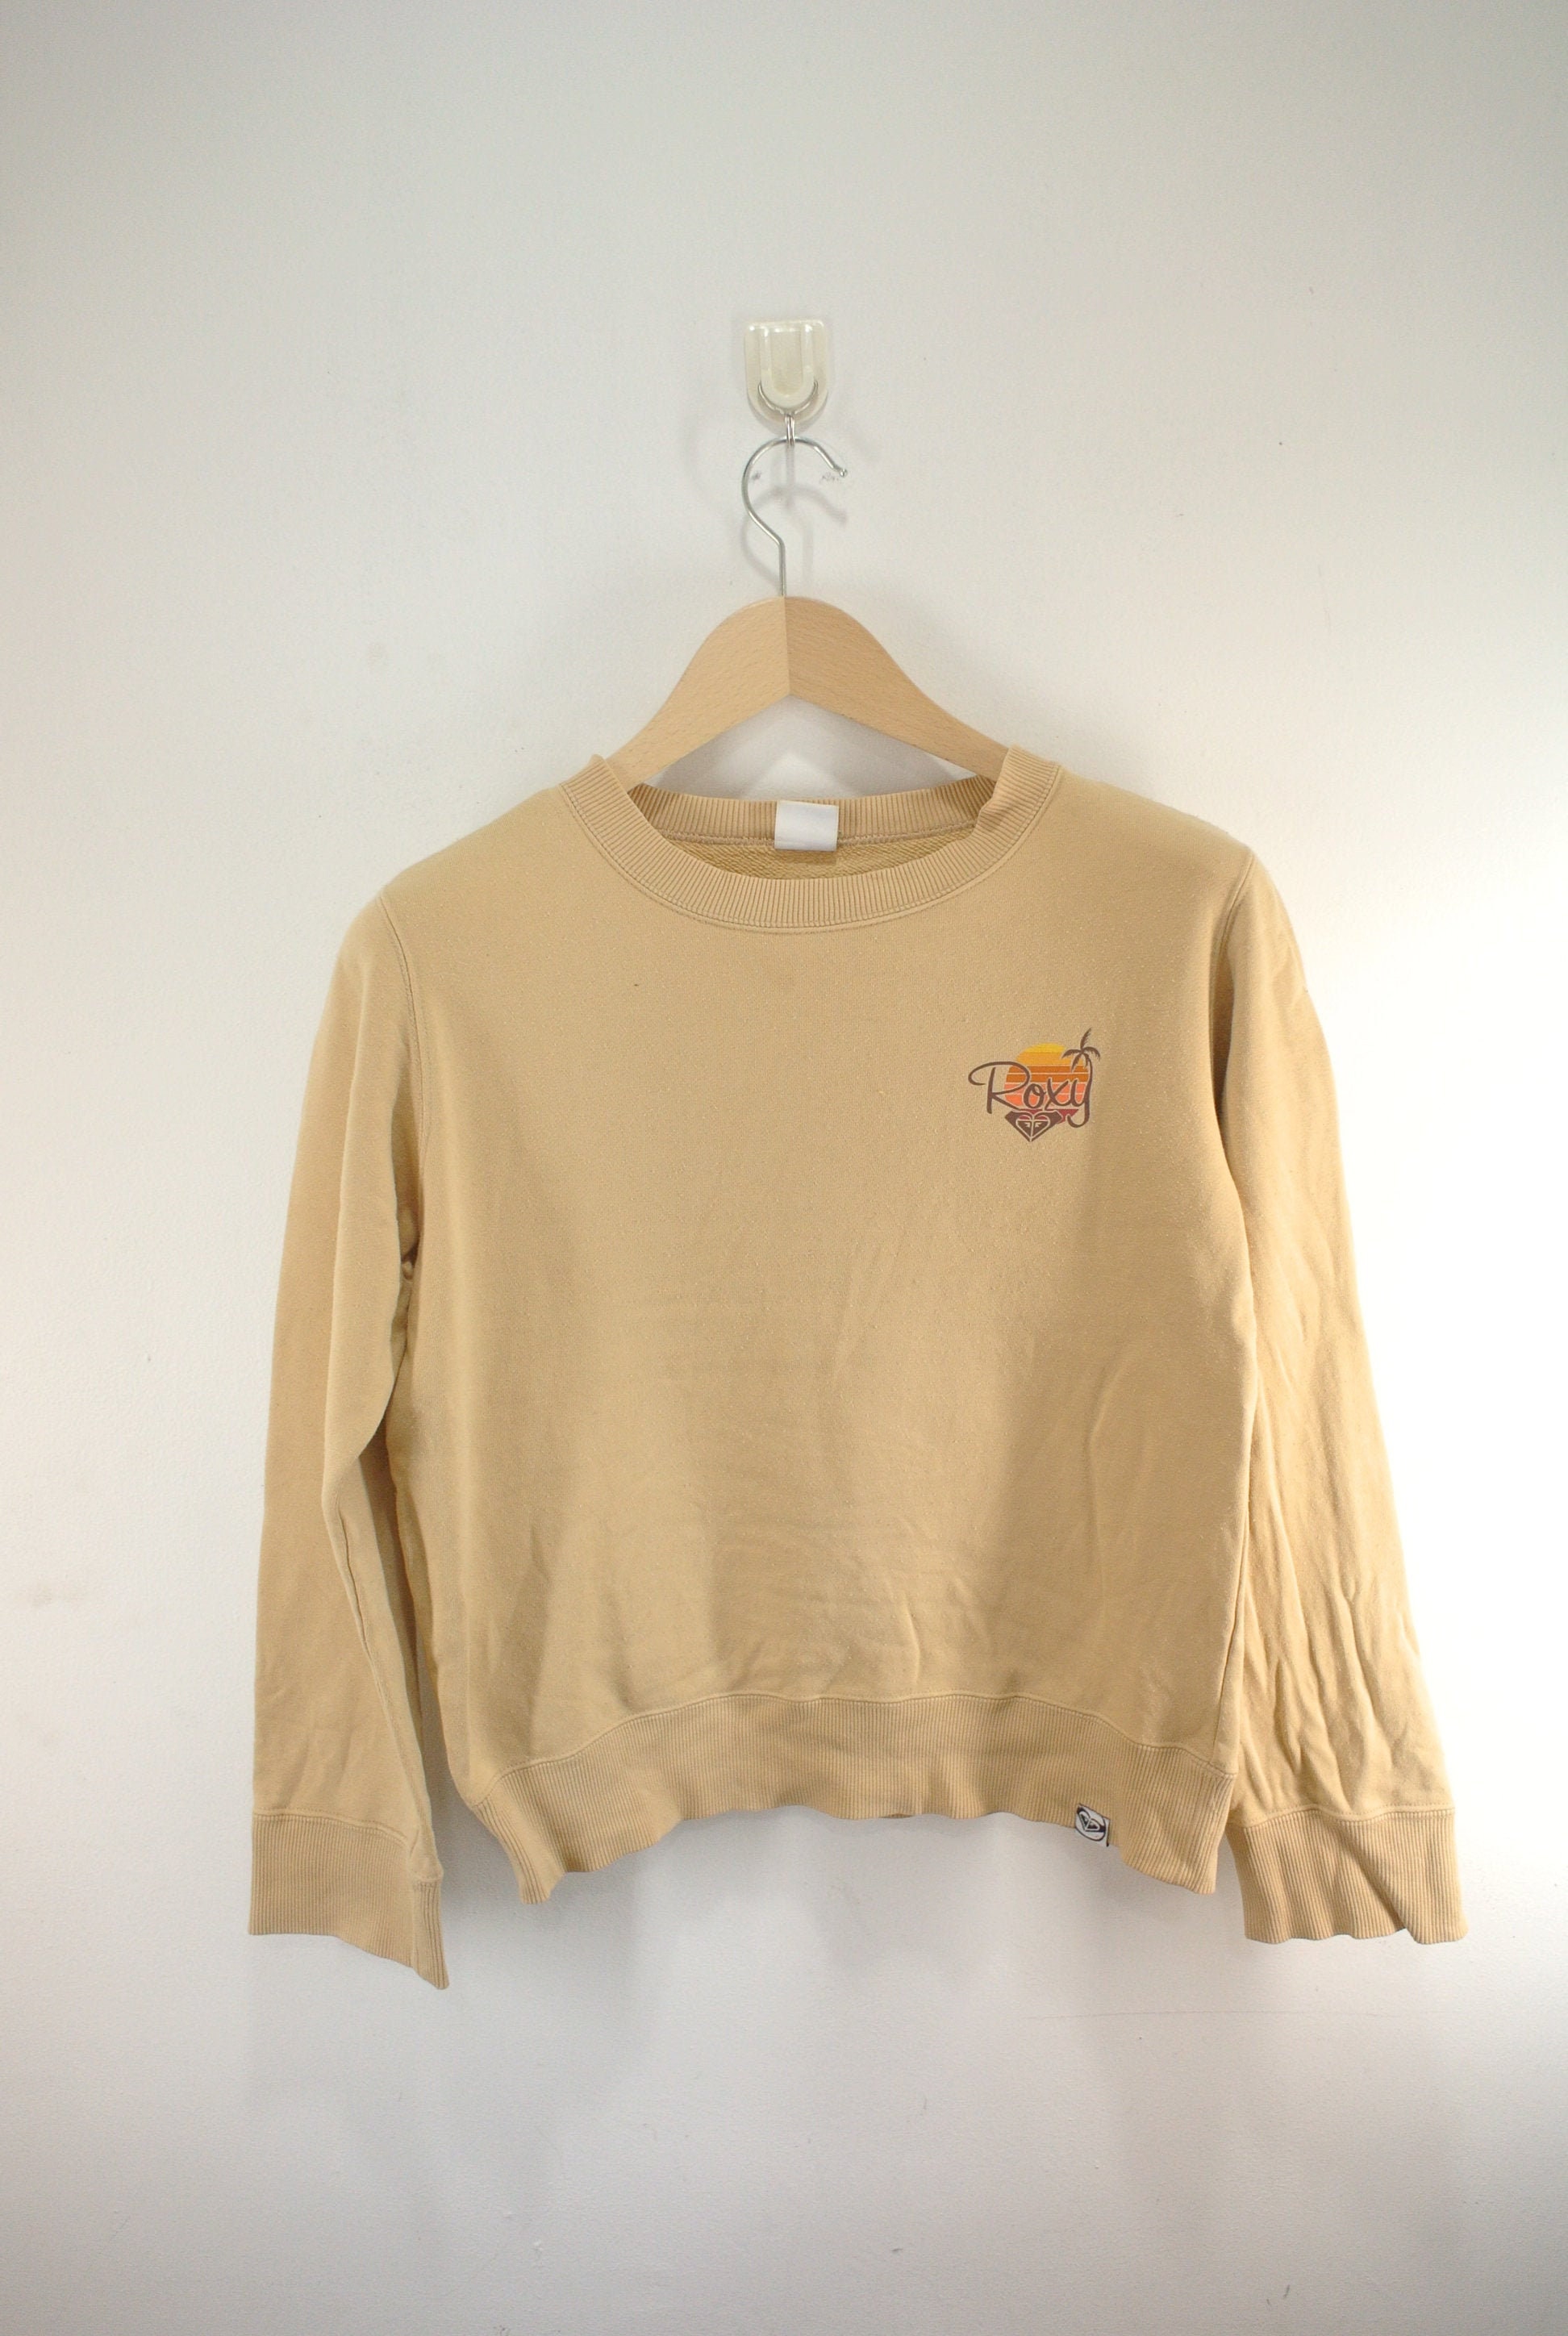 Vintage Roxy Surfwear Sweatshirt Size M | Etsy